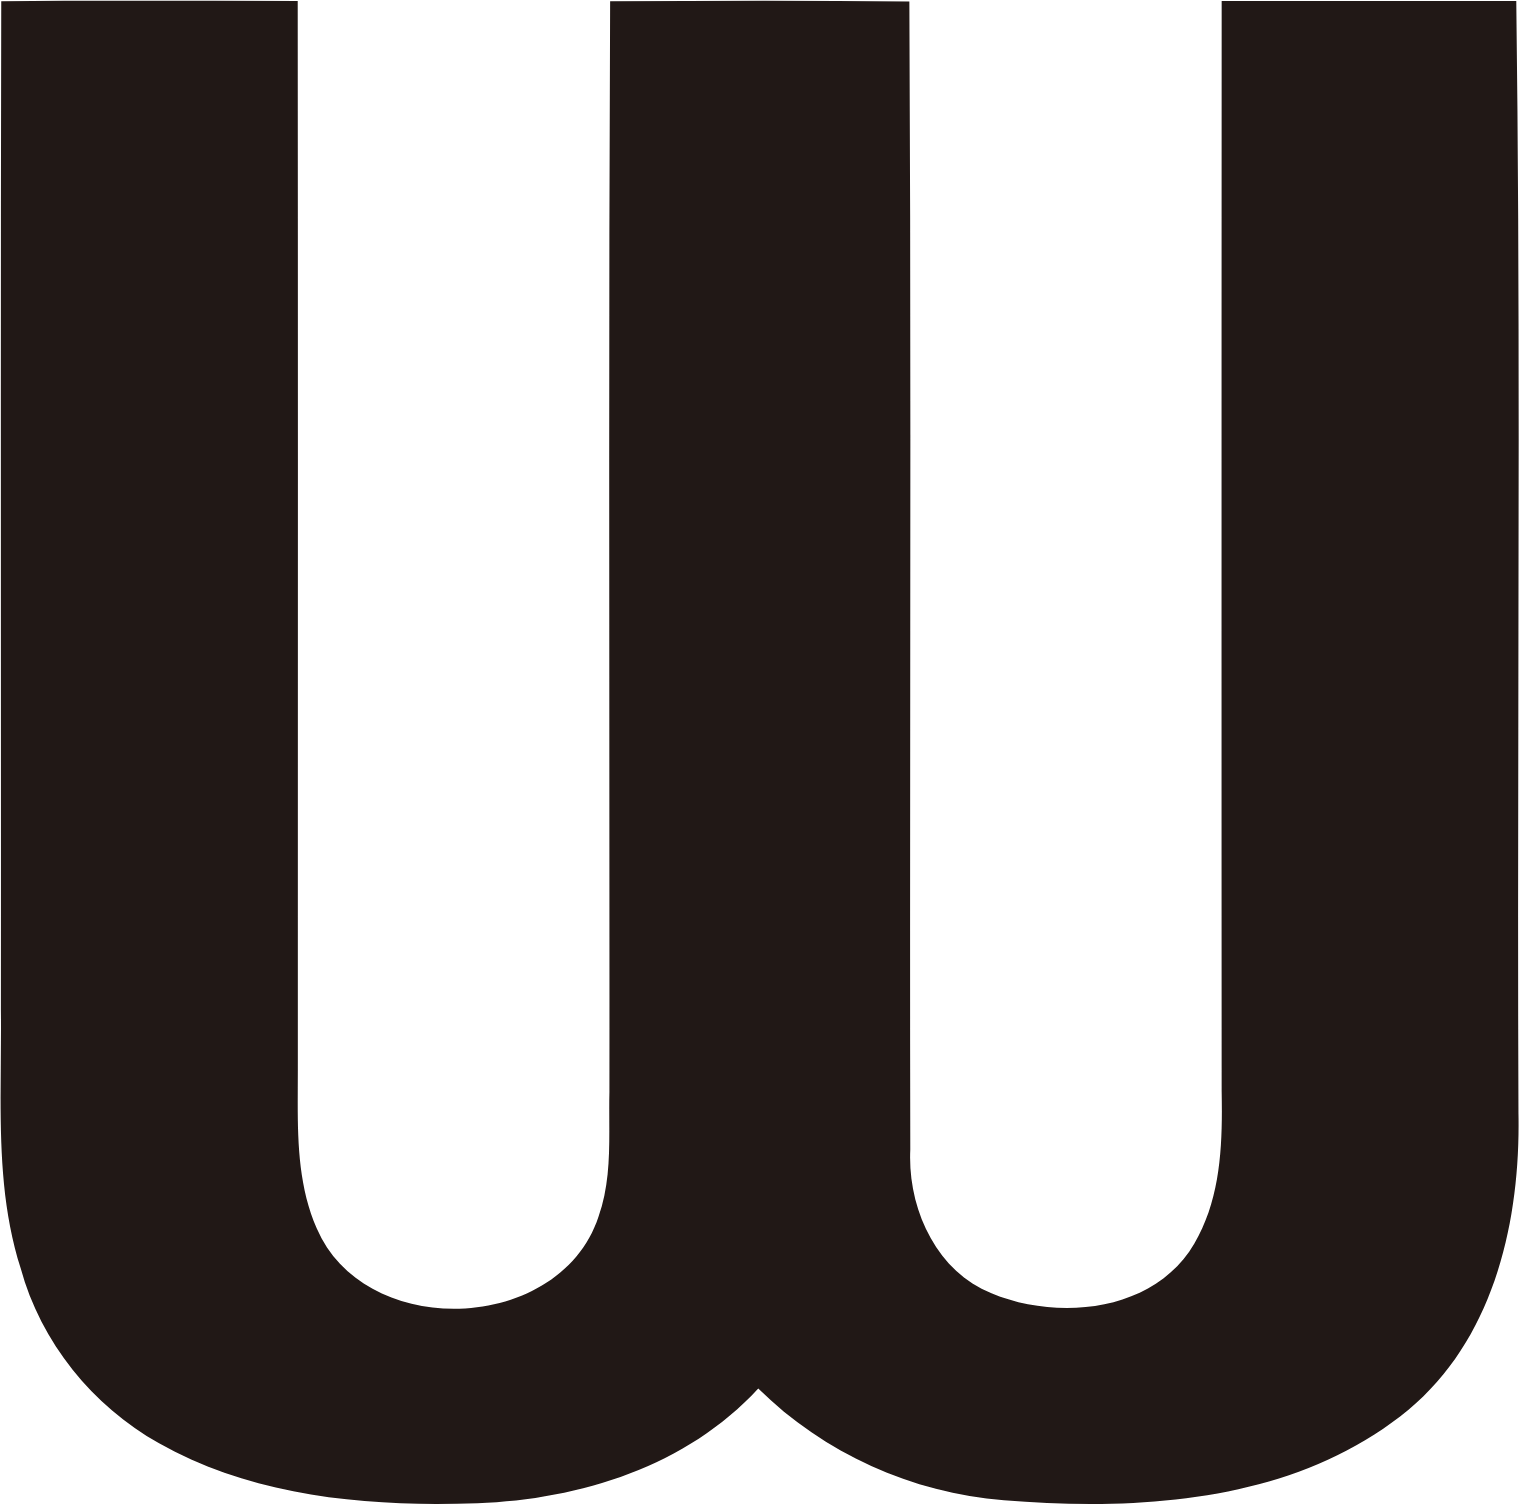 Wemade logo (transparent PNG)